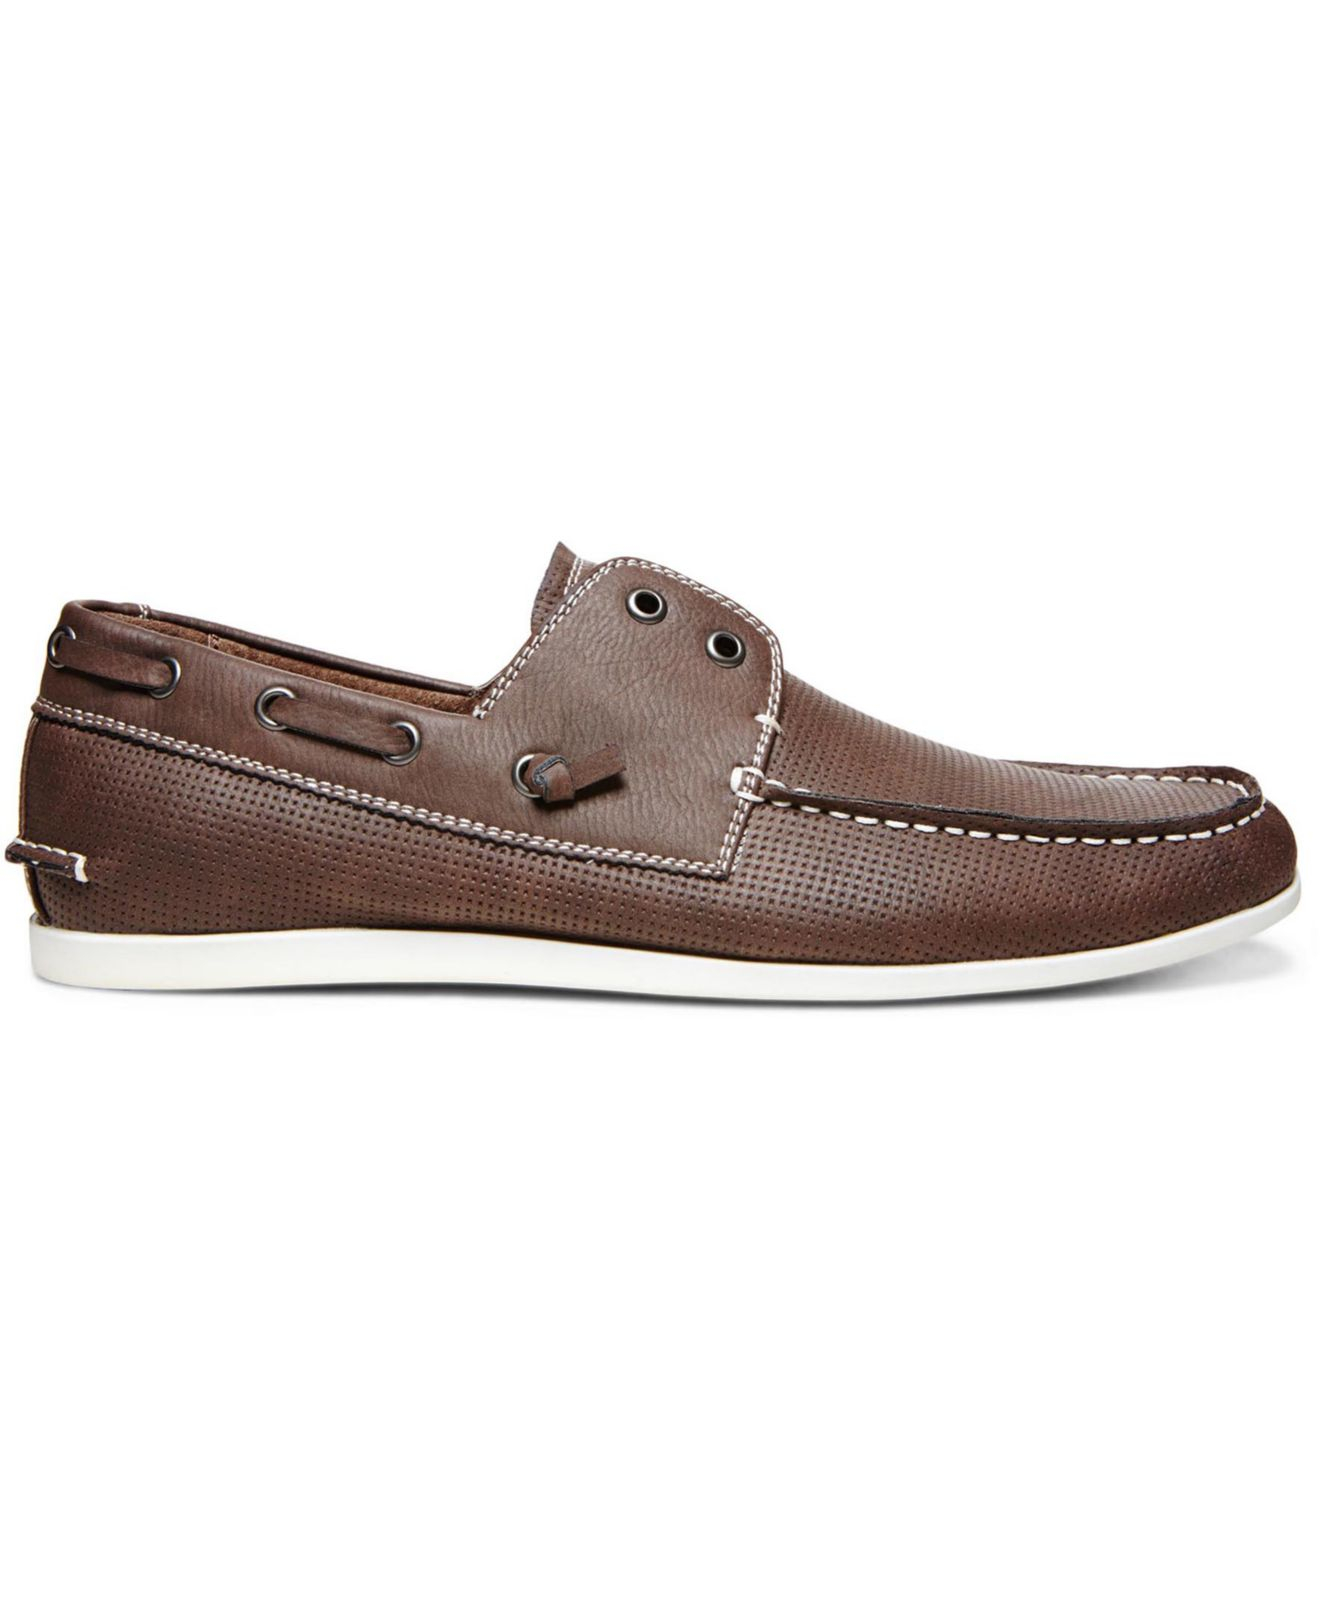 Steve Madden Madden Game On Boat Shoes in Brown for Men - Lyst